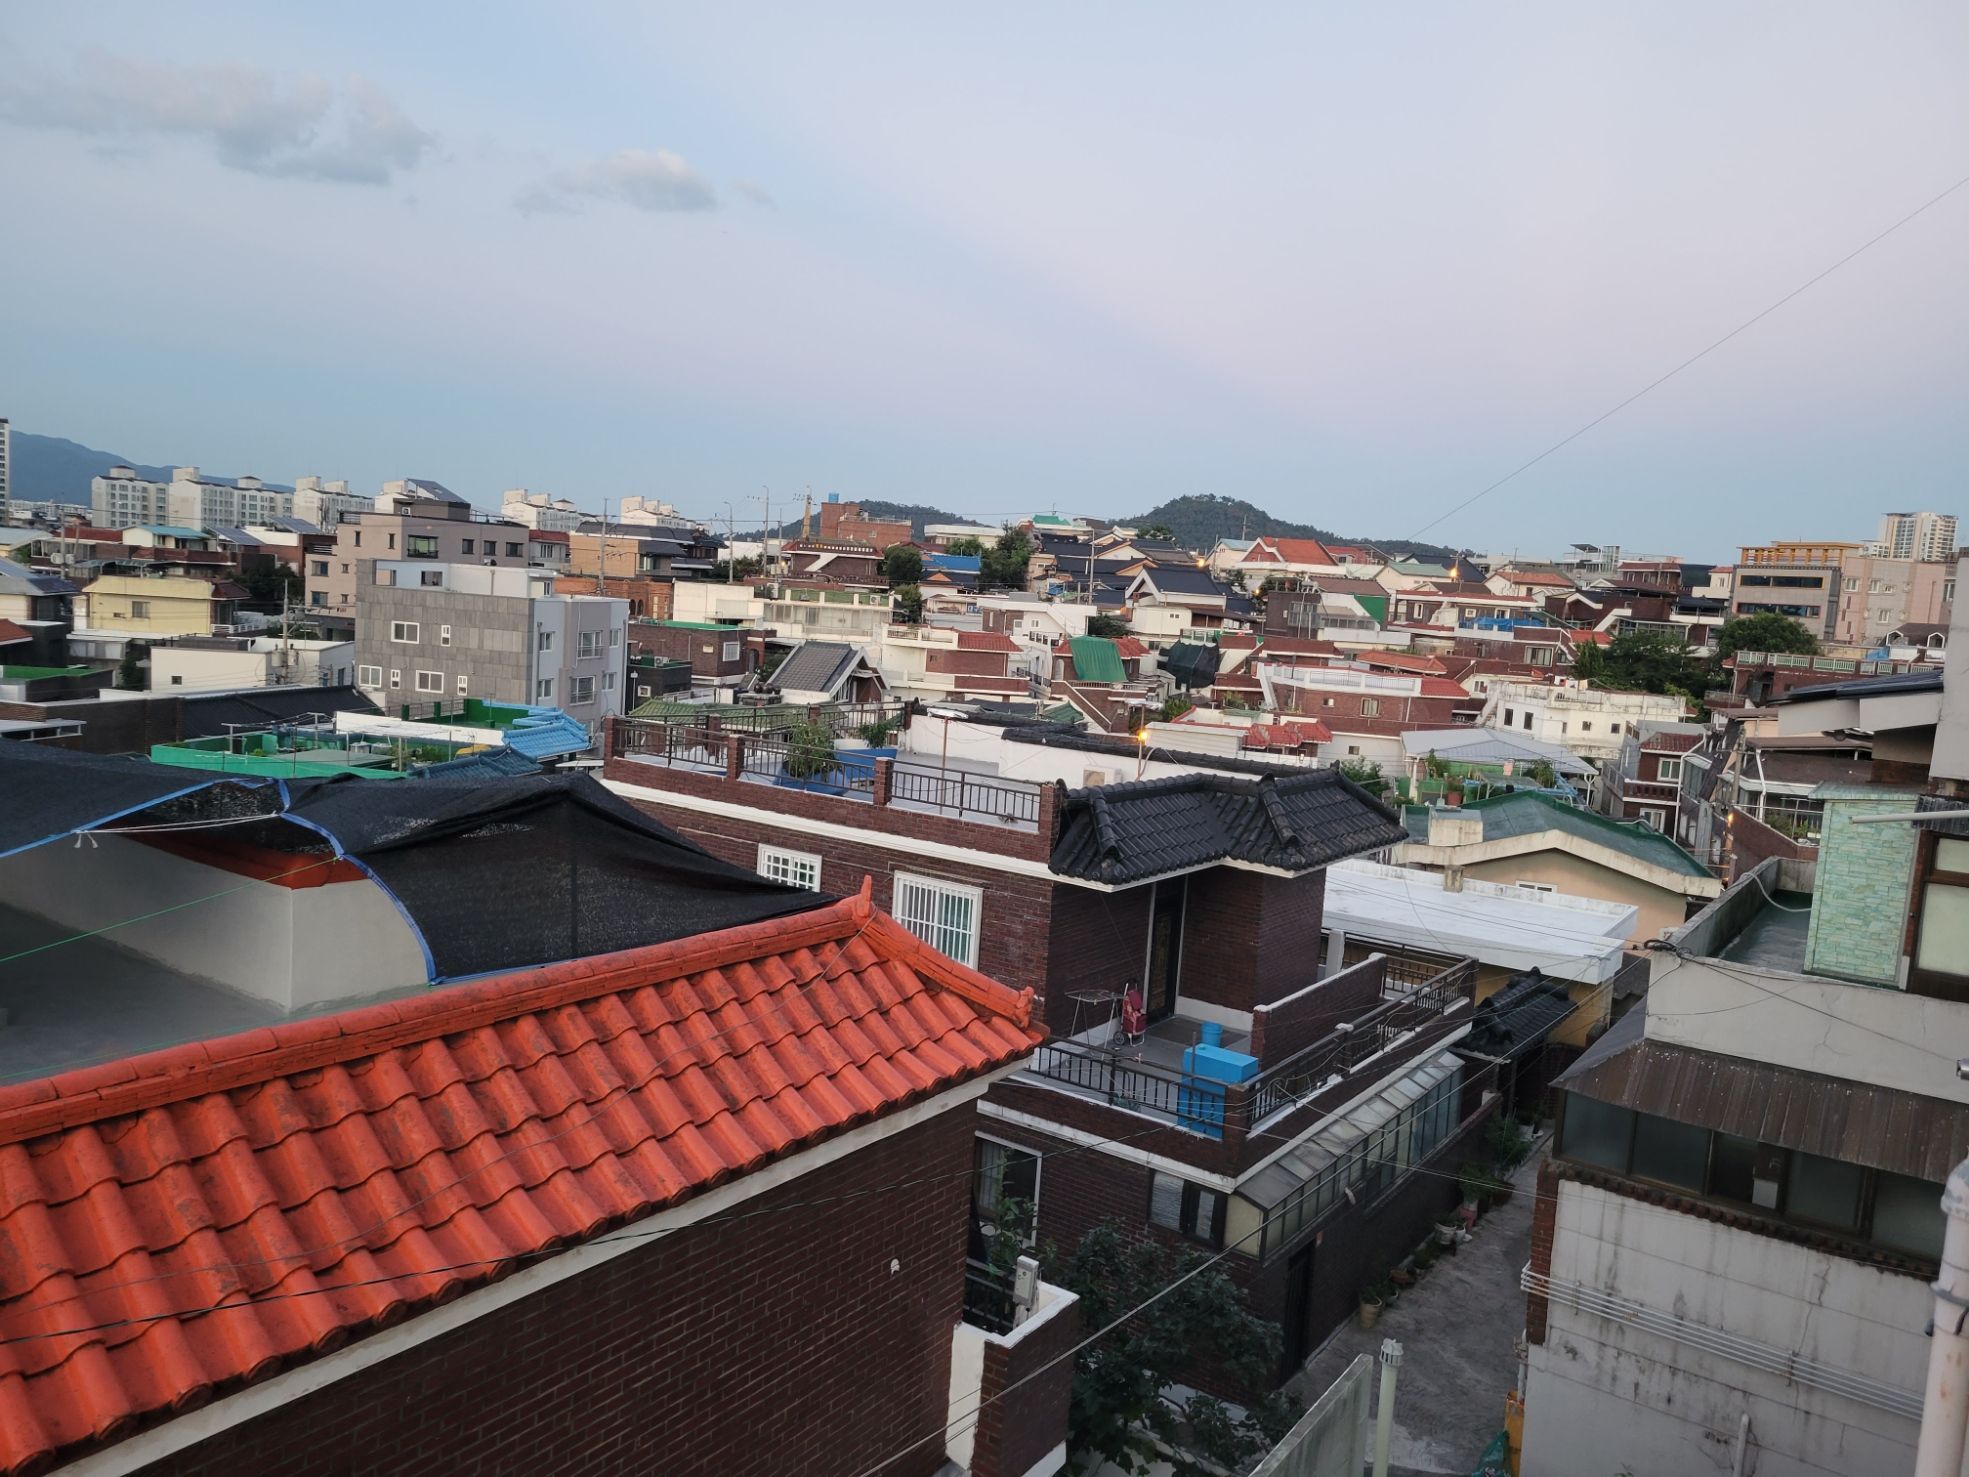 Korean vs American Kitchens < The South of Seoul Blog